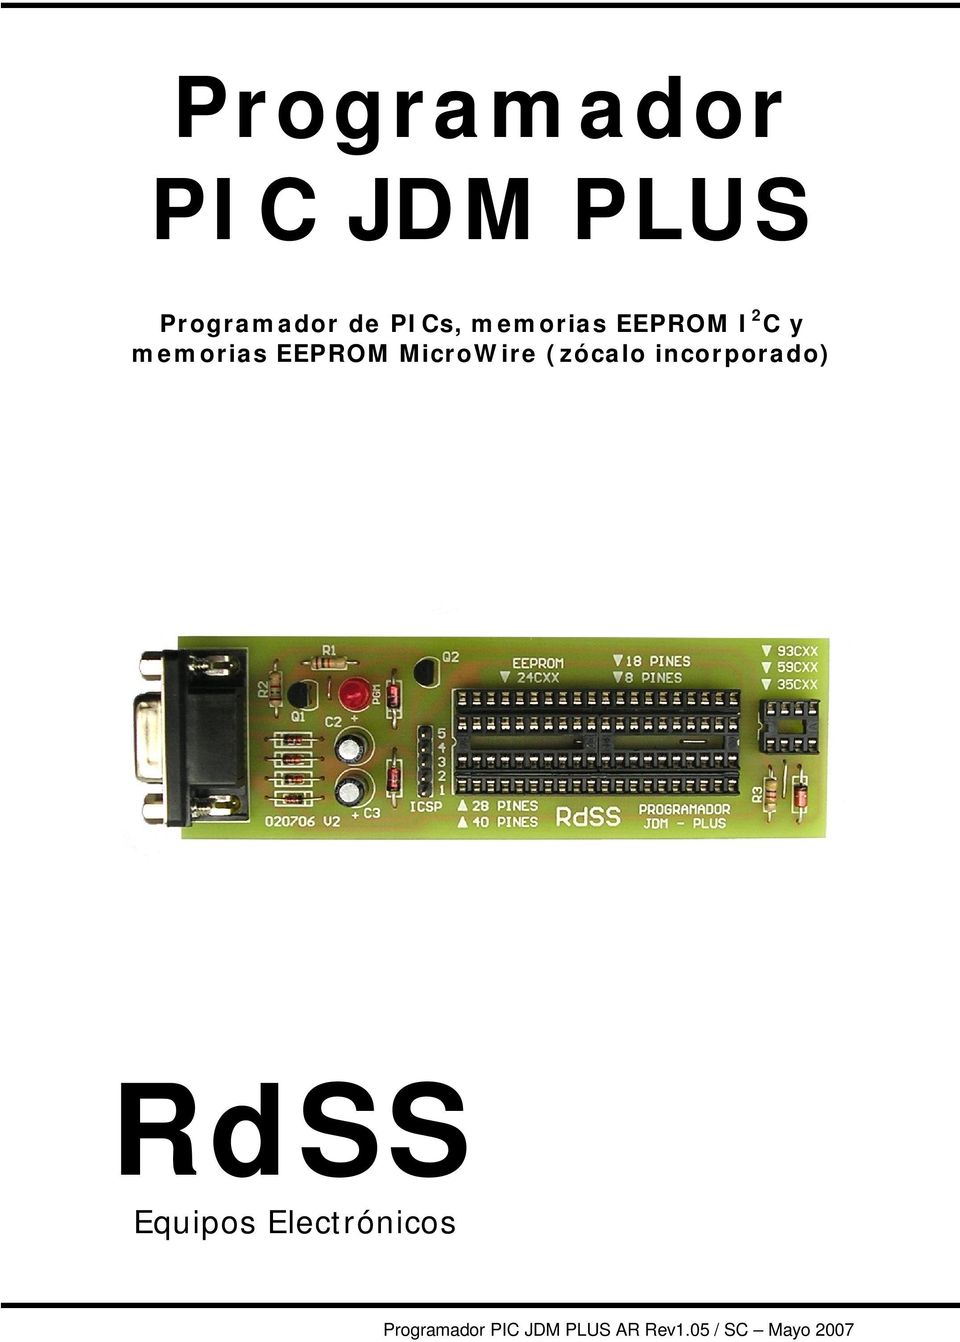 MicroWire (zócalo incorporado) RdSS Equipos